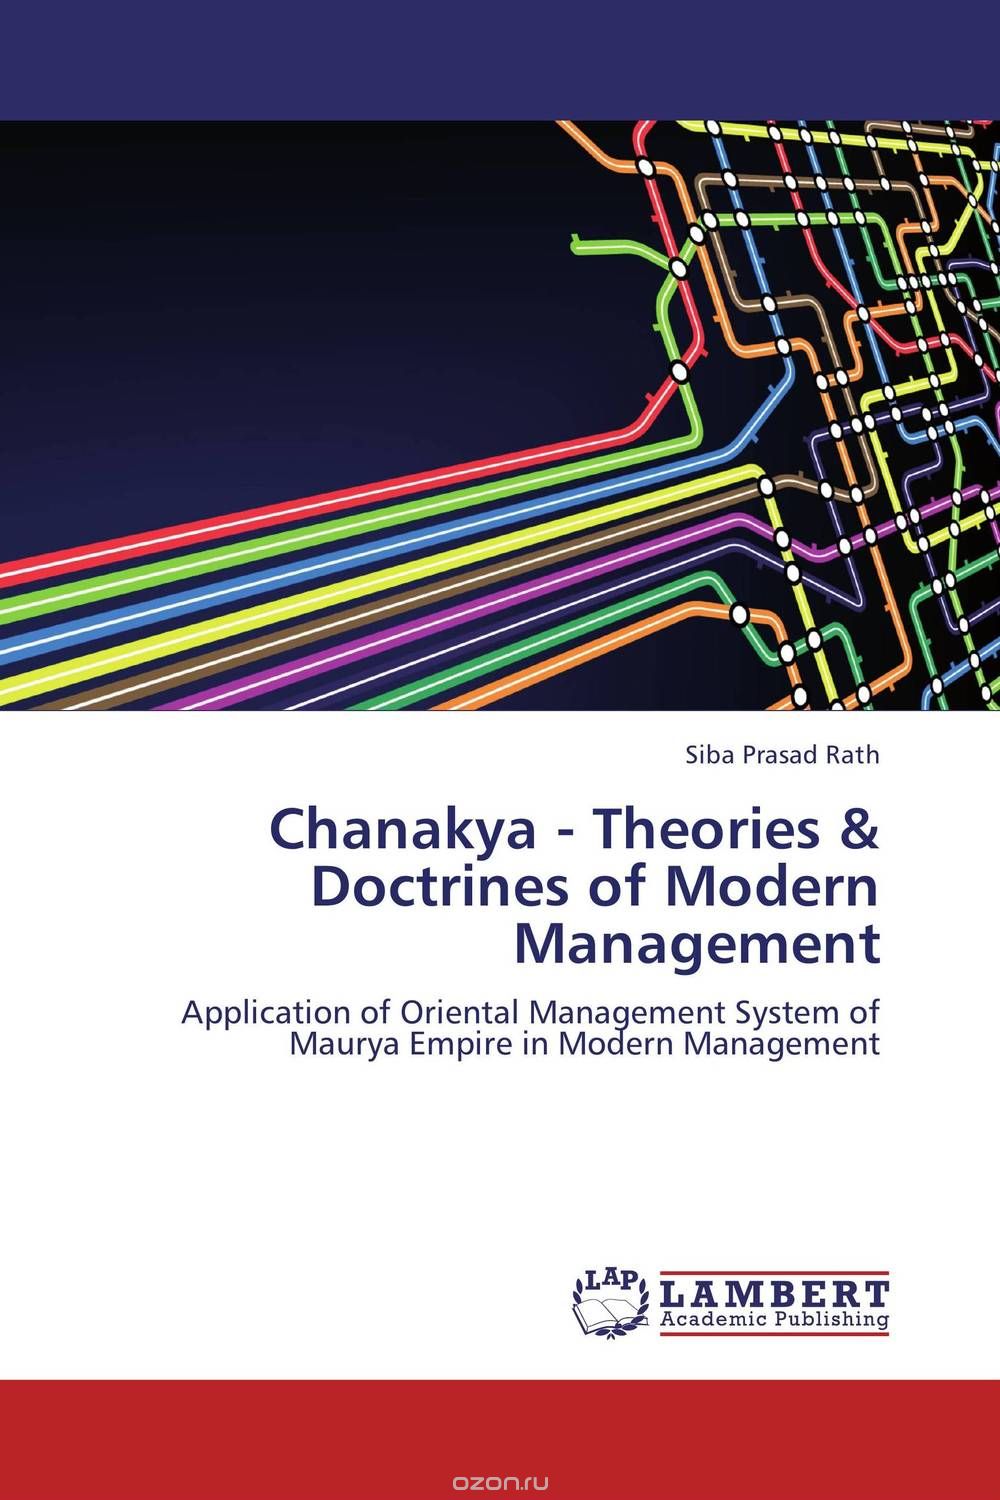 Скачать книгу "Chanakya - Theories & Doctrines of Modern Management"